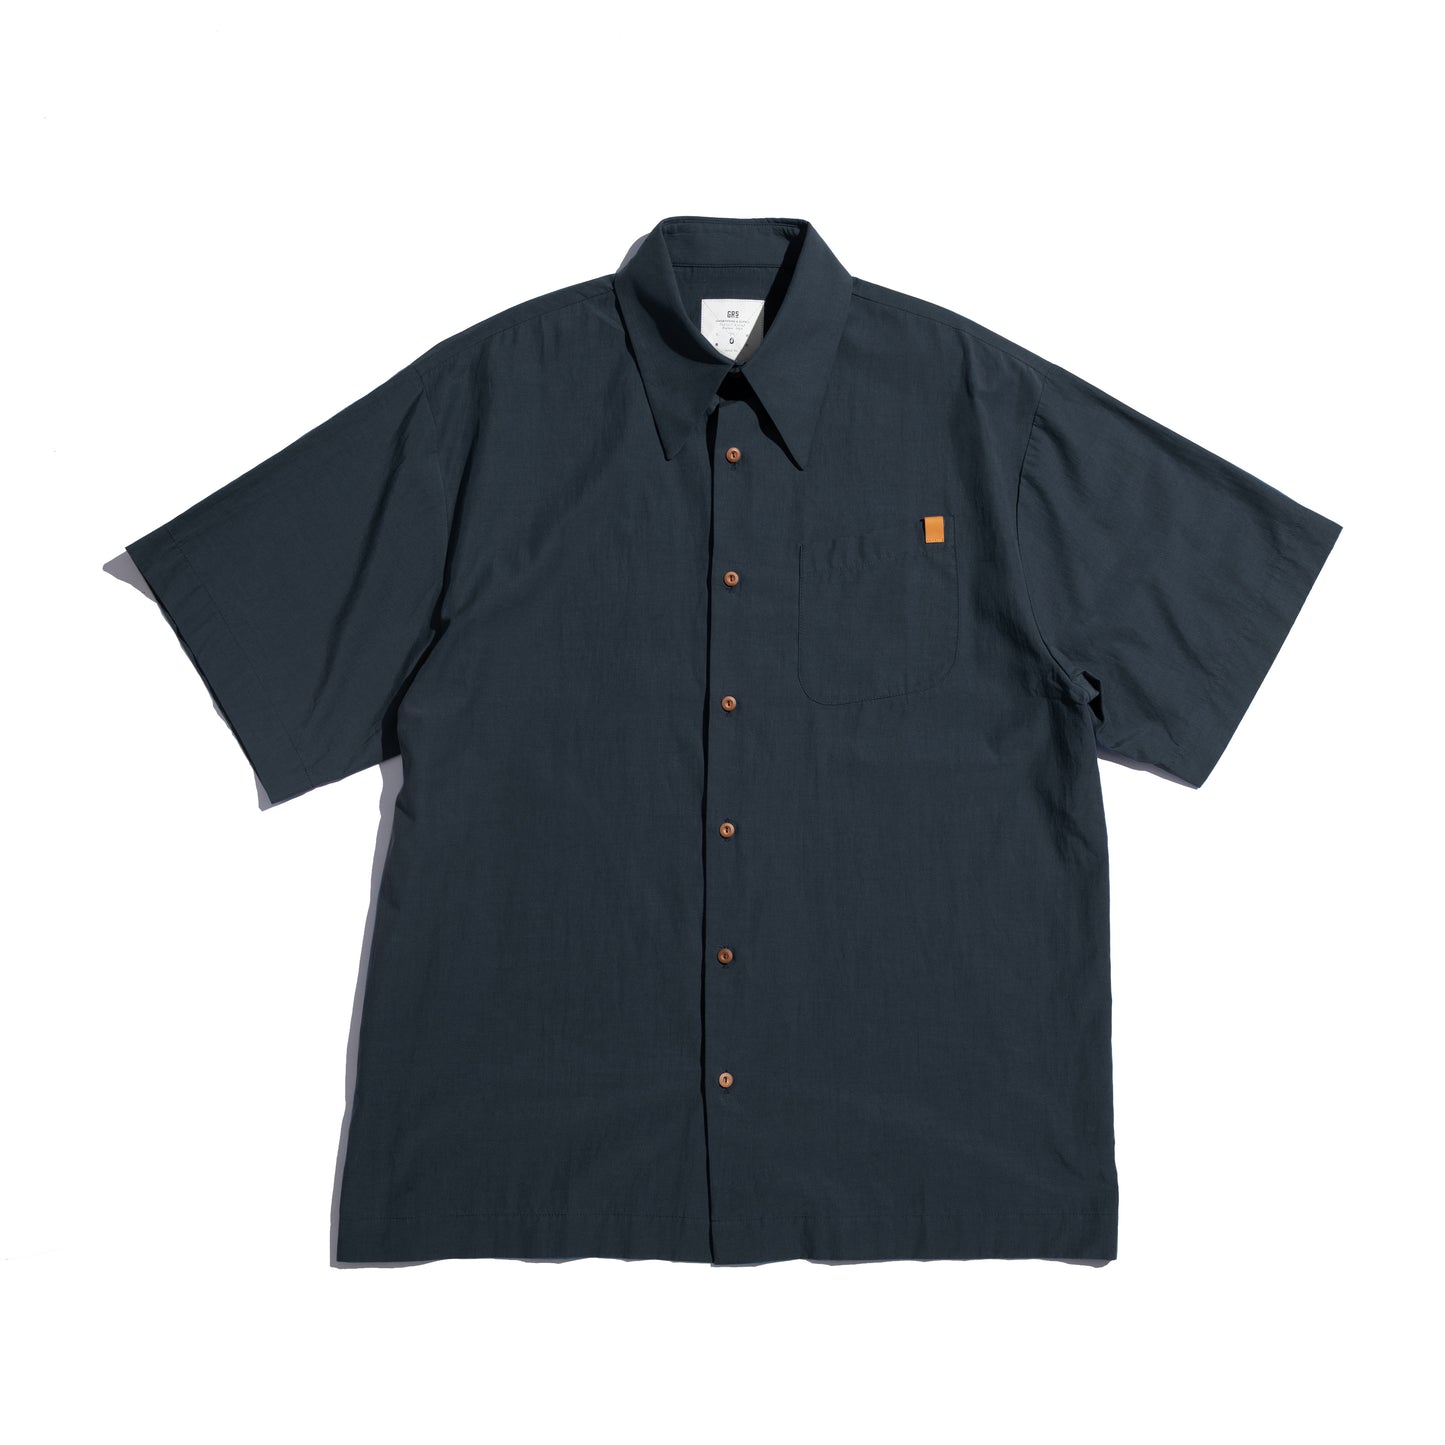 Faded Color S/S Pocket Big Shirt / Dark Charcoal